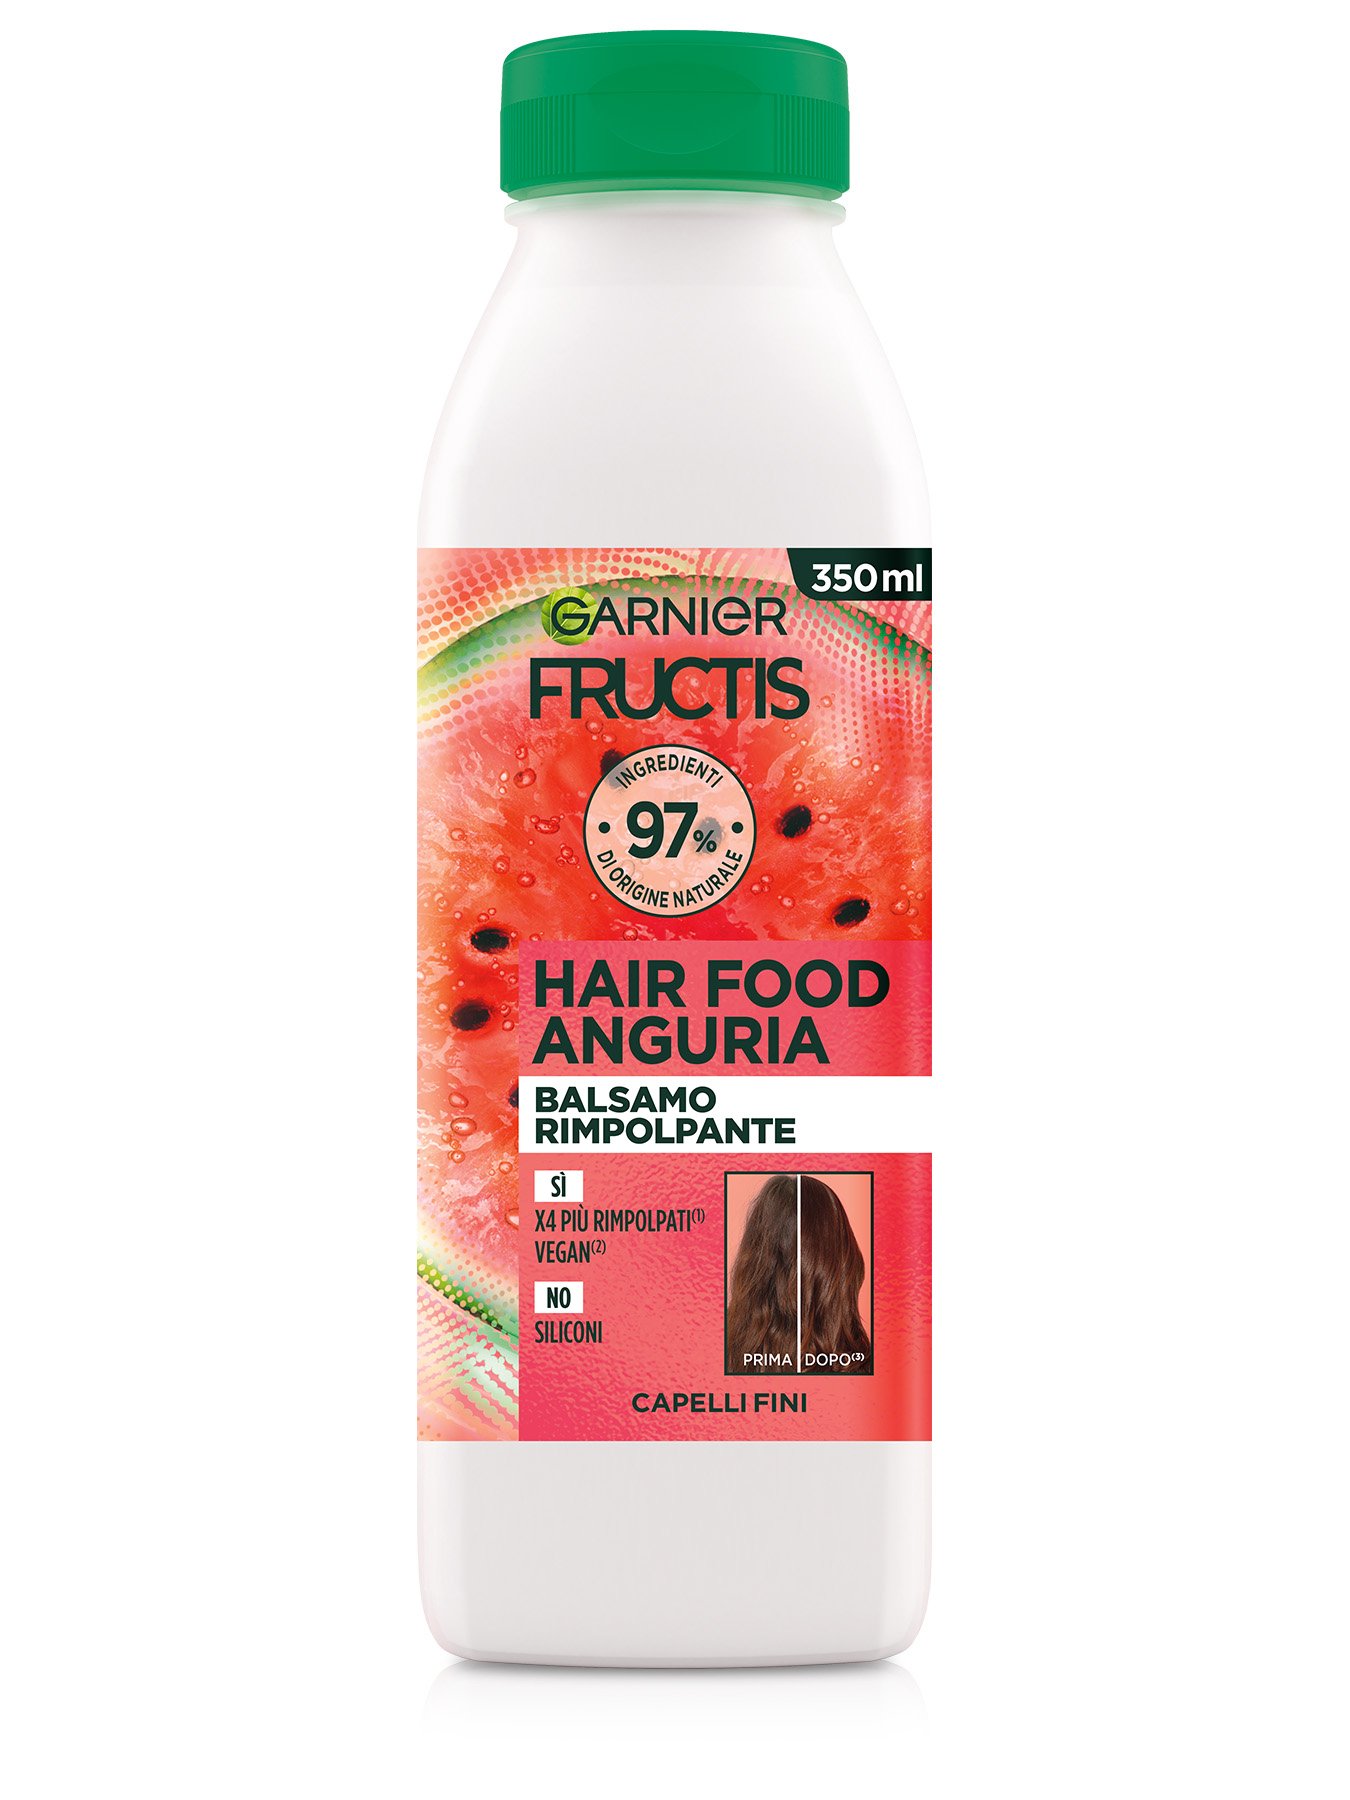 Fructis Hair Food Anguria Balsamo